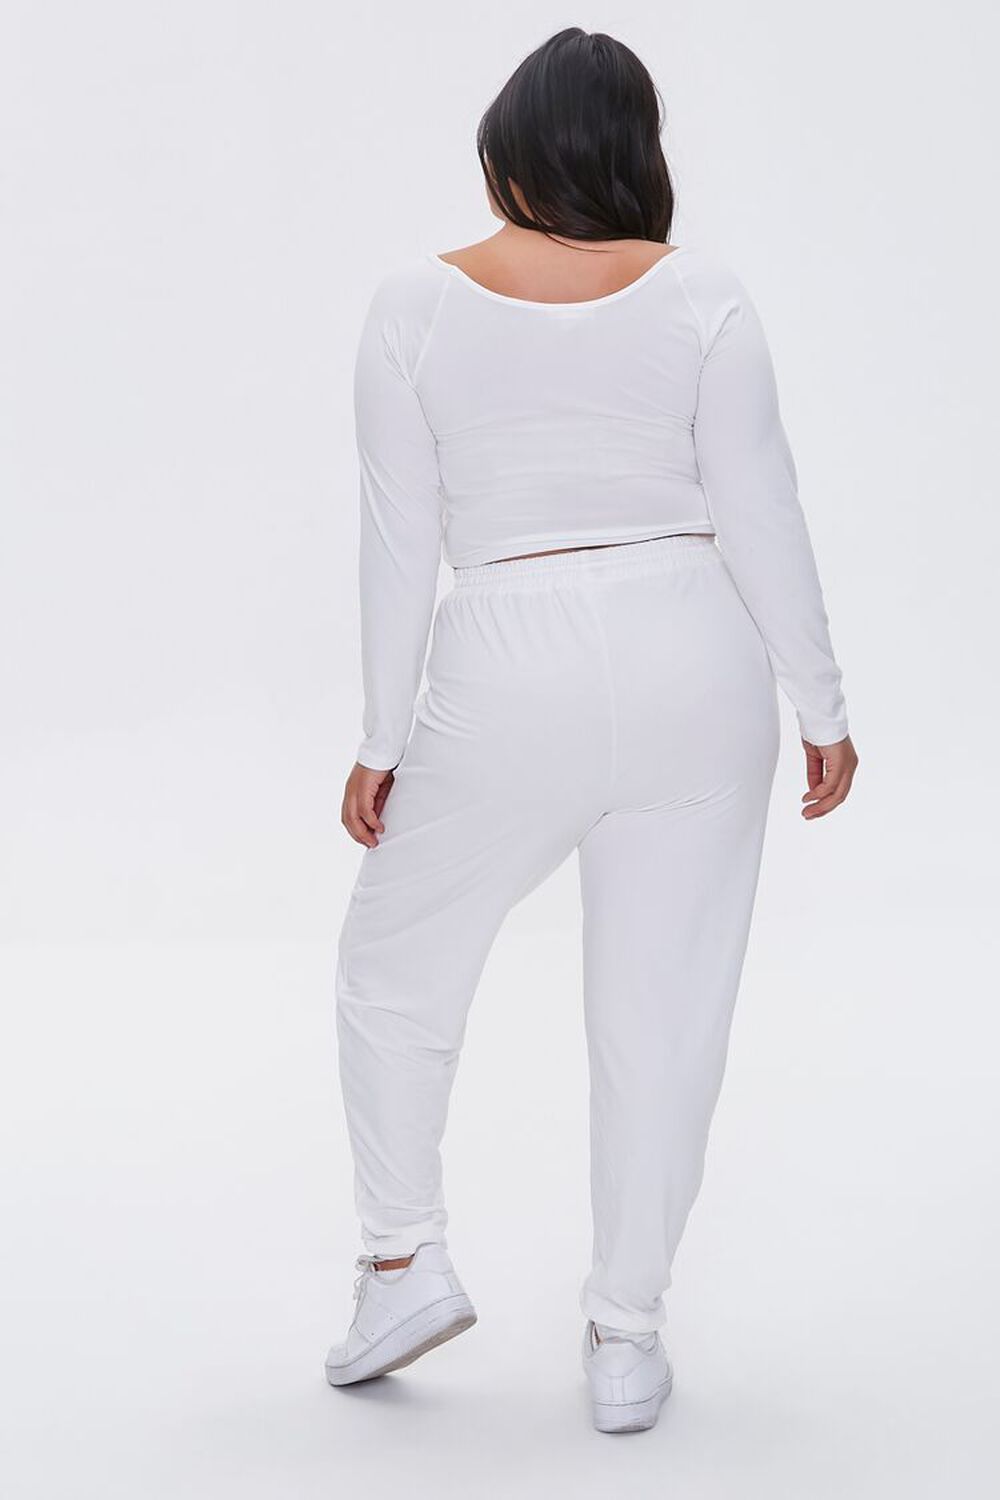 WHITE Plus Size Ruched Crop Top & Sweatpants Set, image 3